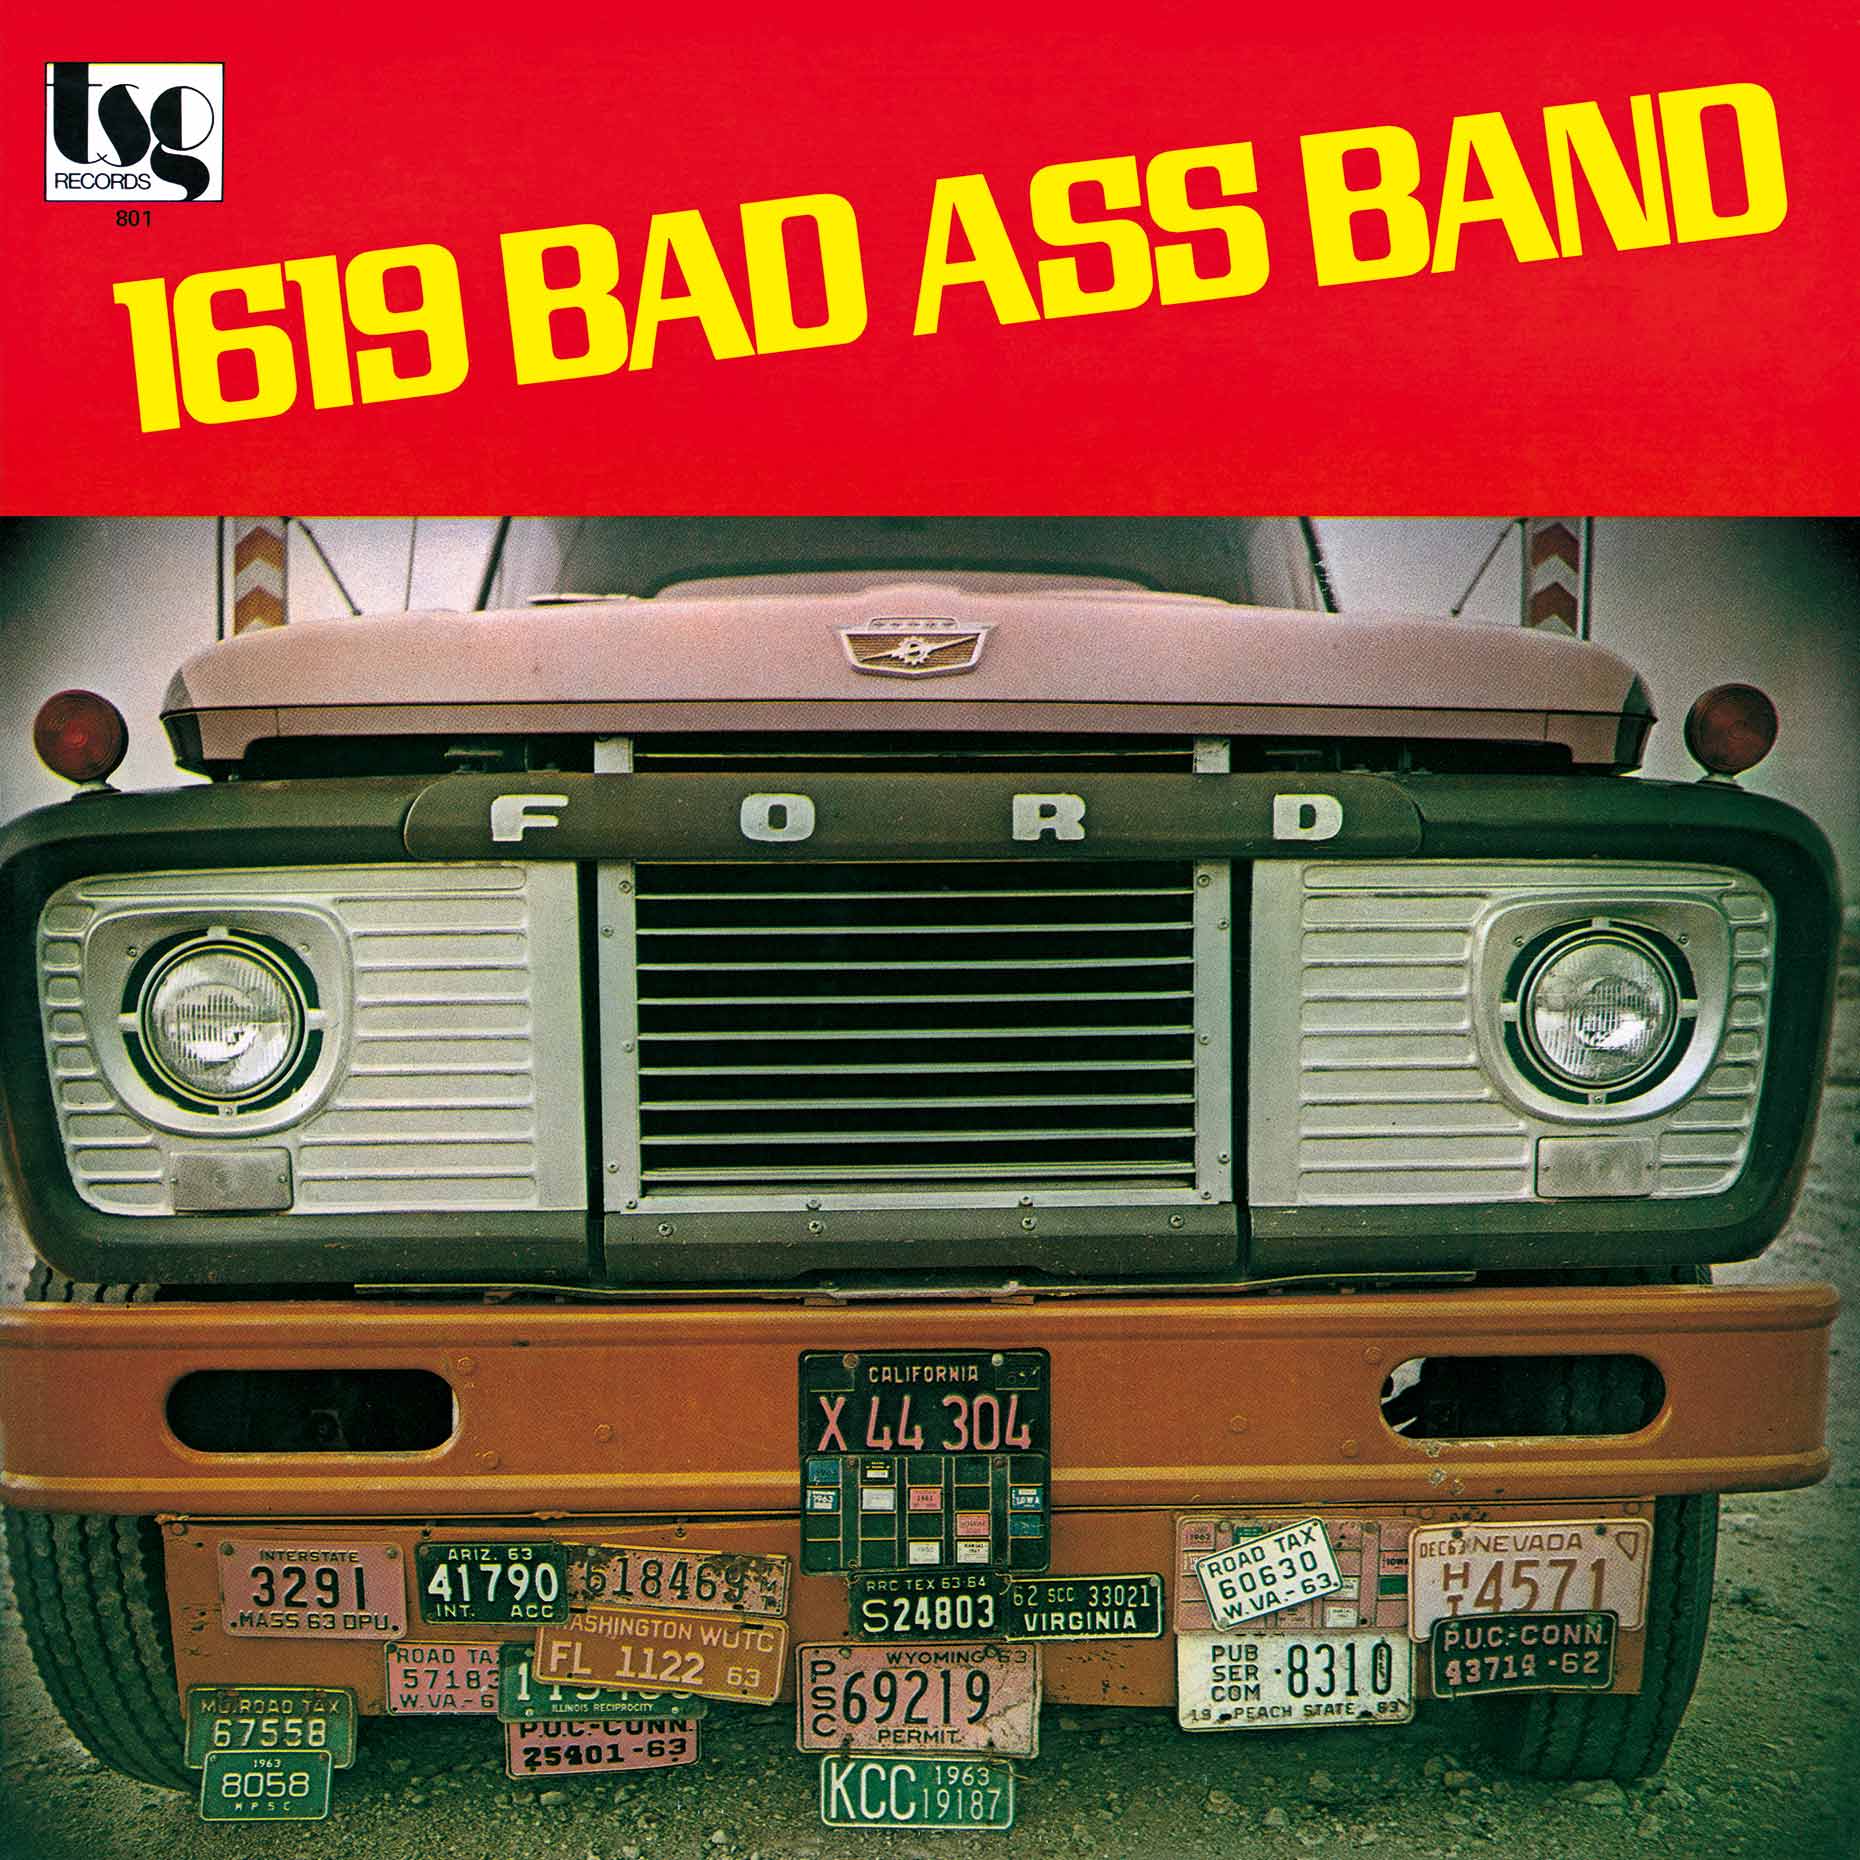 1619 BAD ASS BAND「1619 Bad Ass Band」